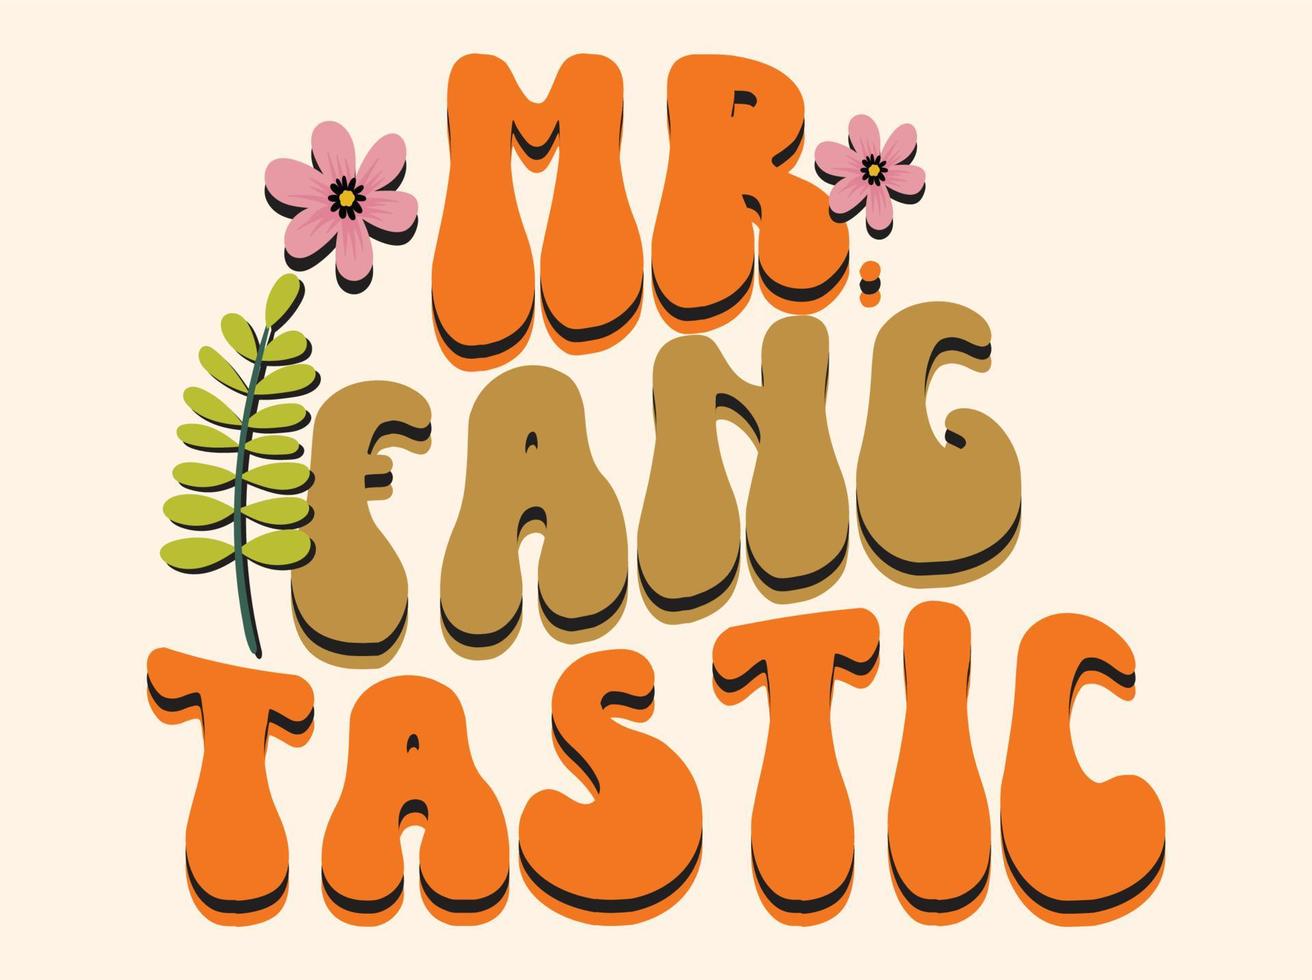 Mr. fang tastic ,Fall t-shirt design vector